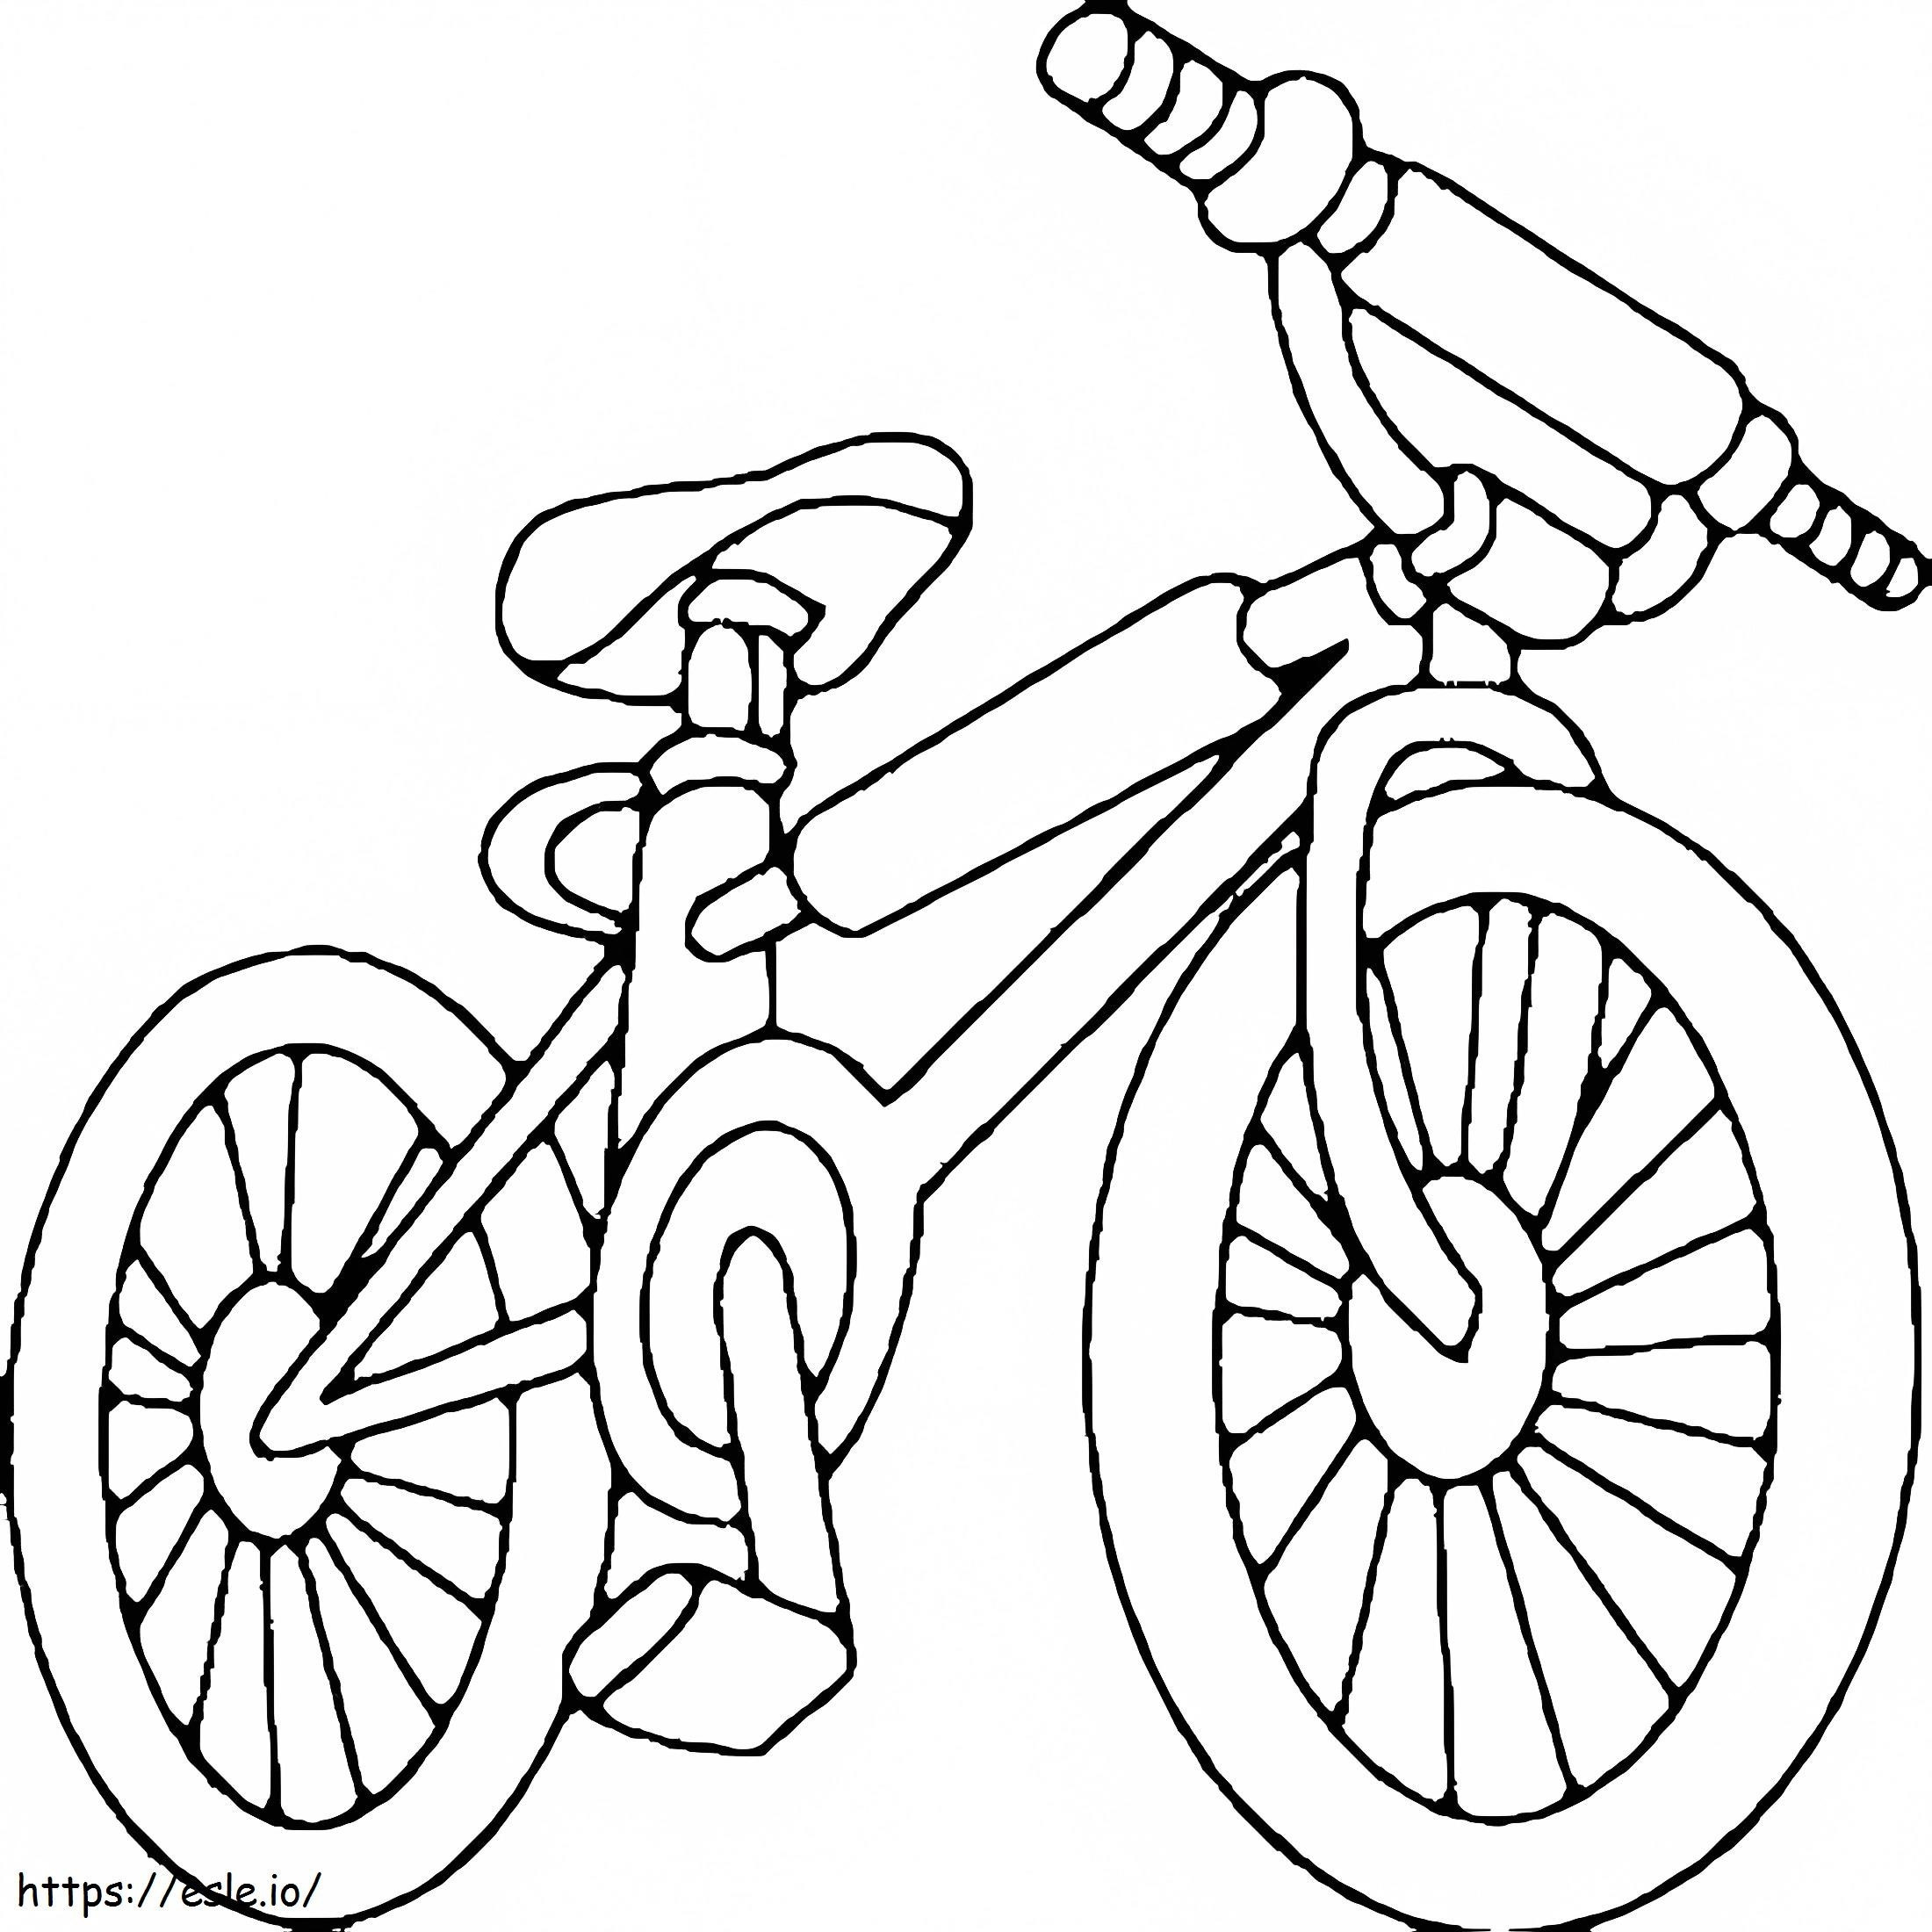 Single Bike coloring page